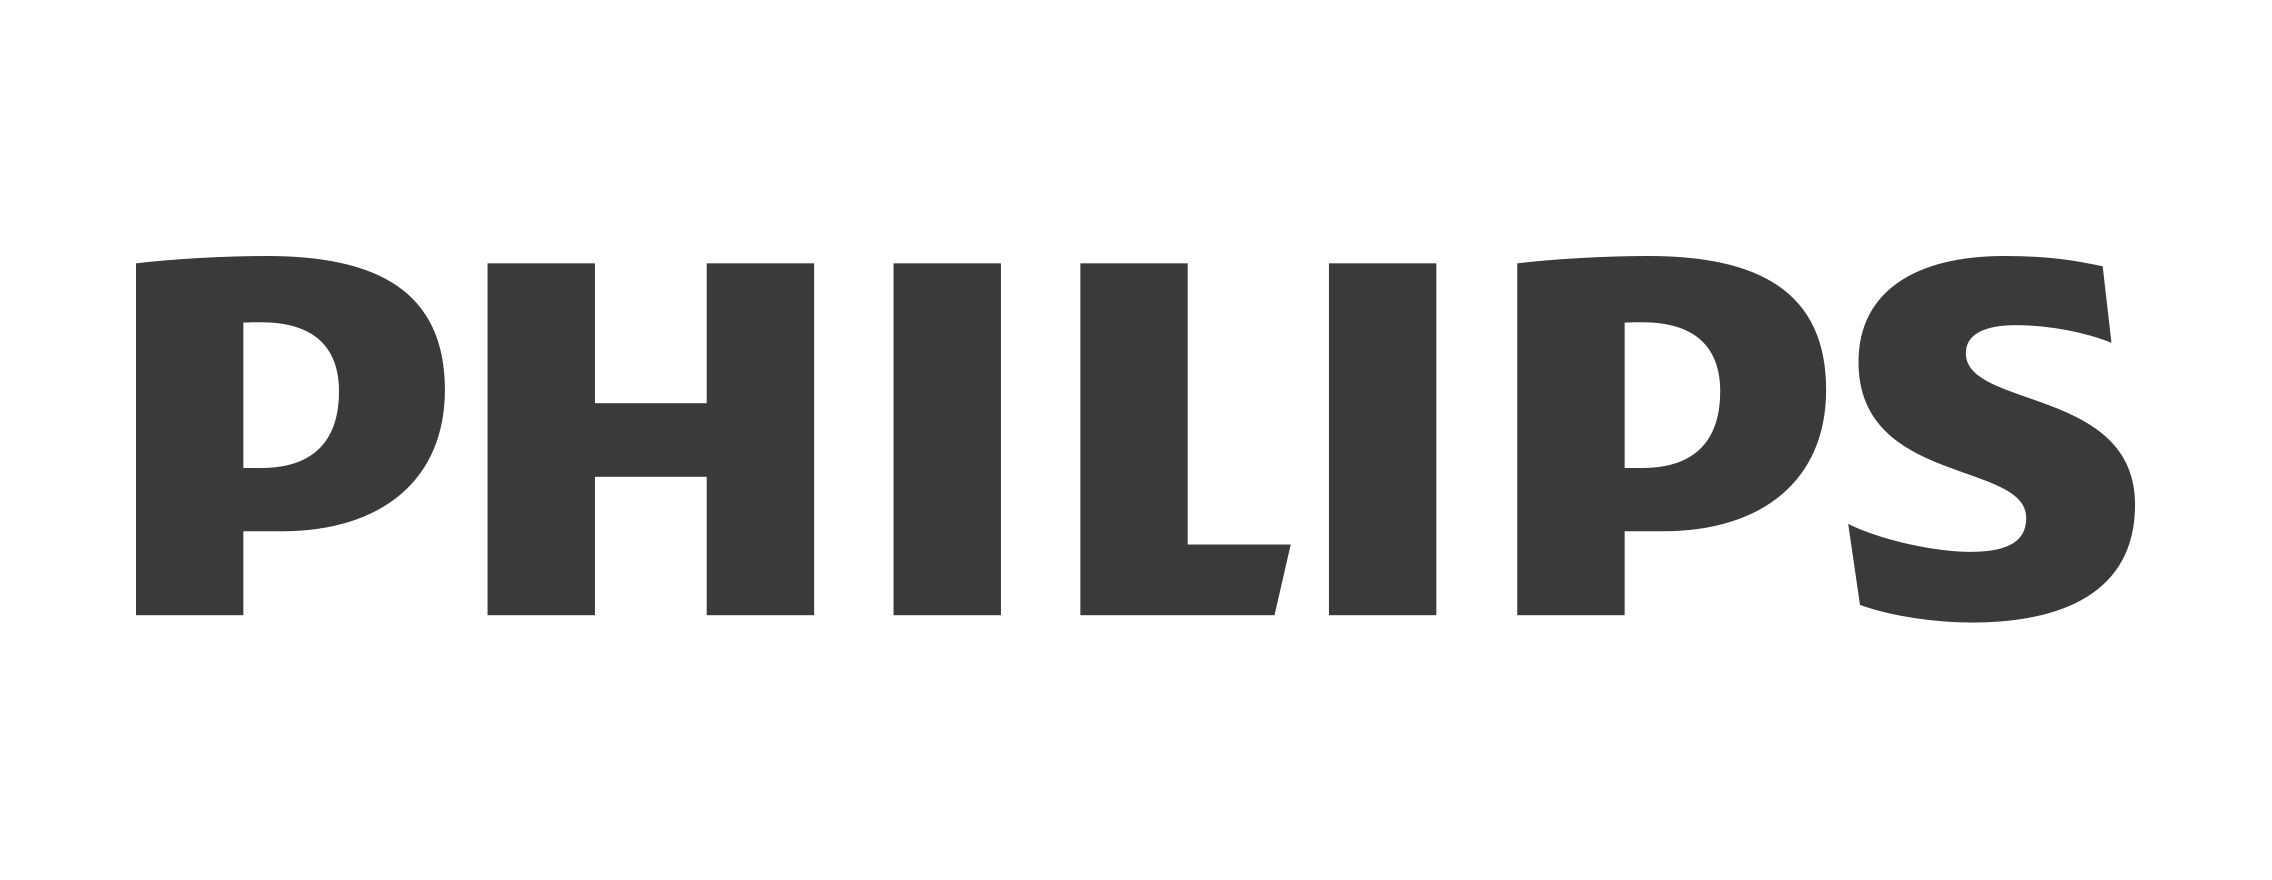 philips-logo-wordmark.png